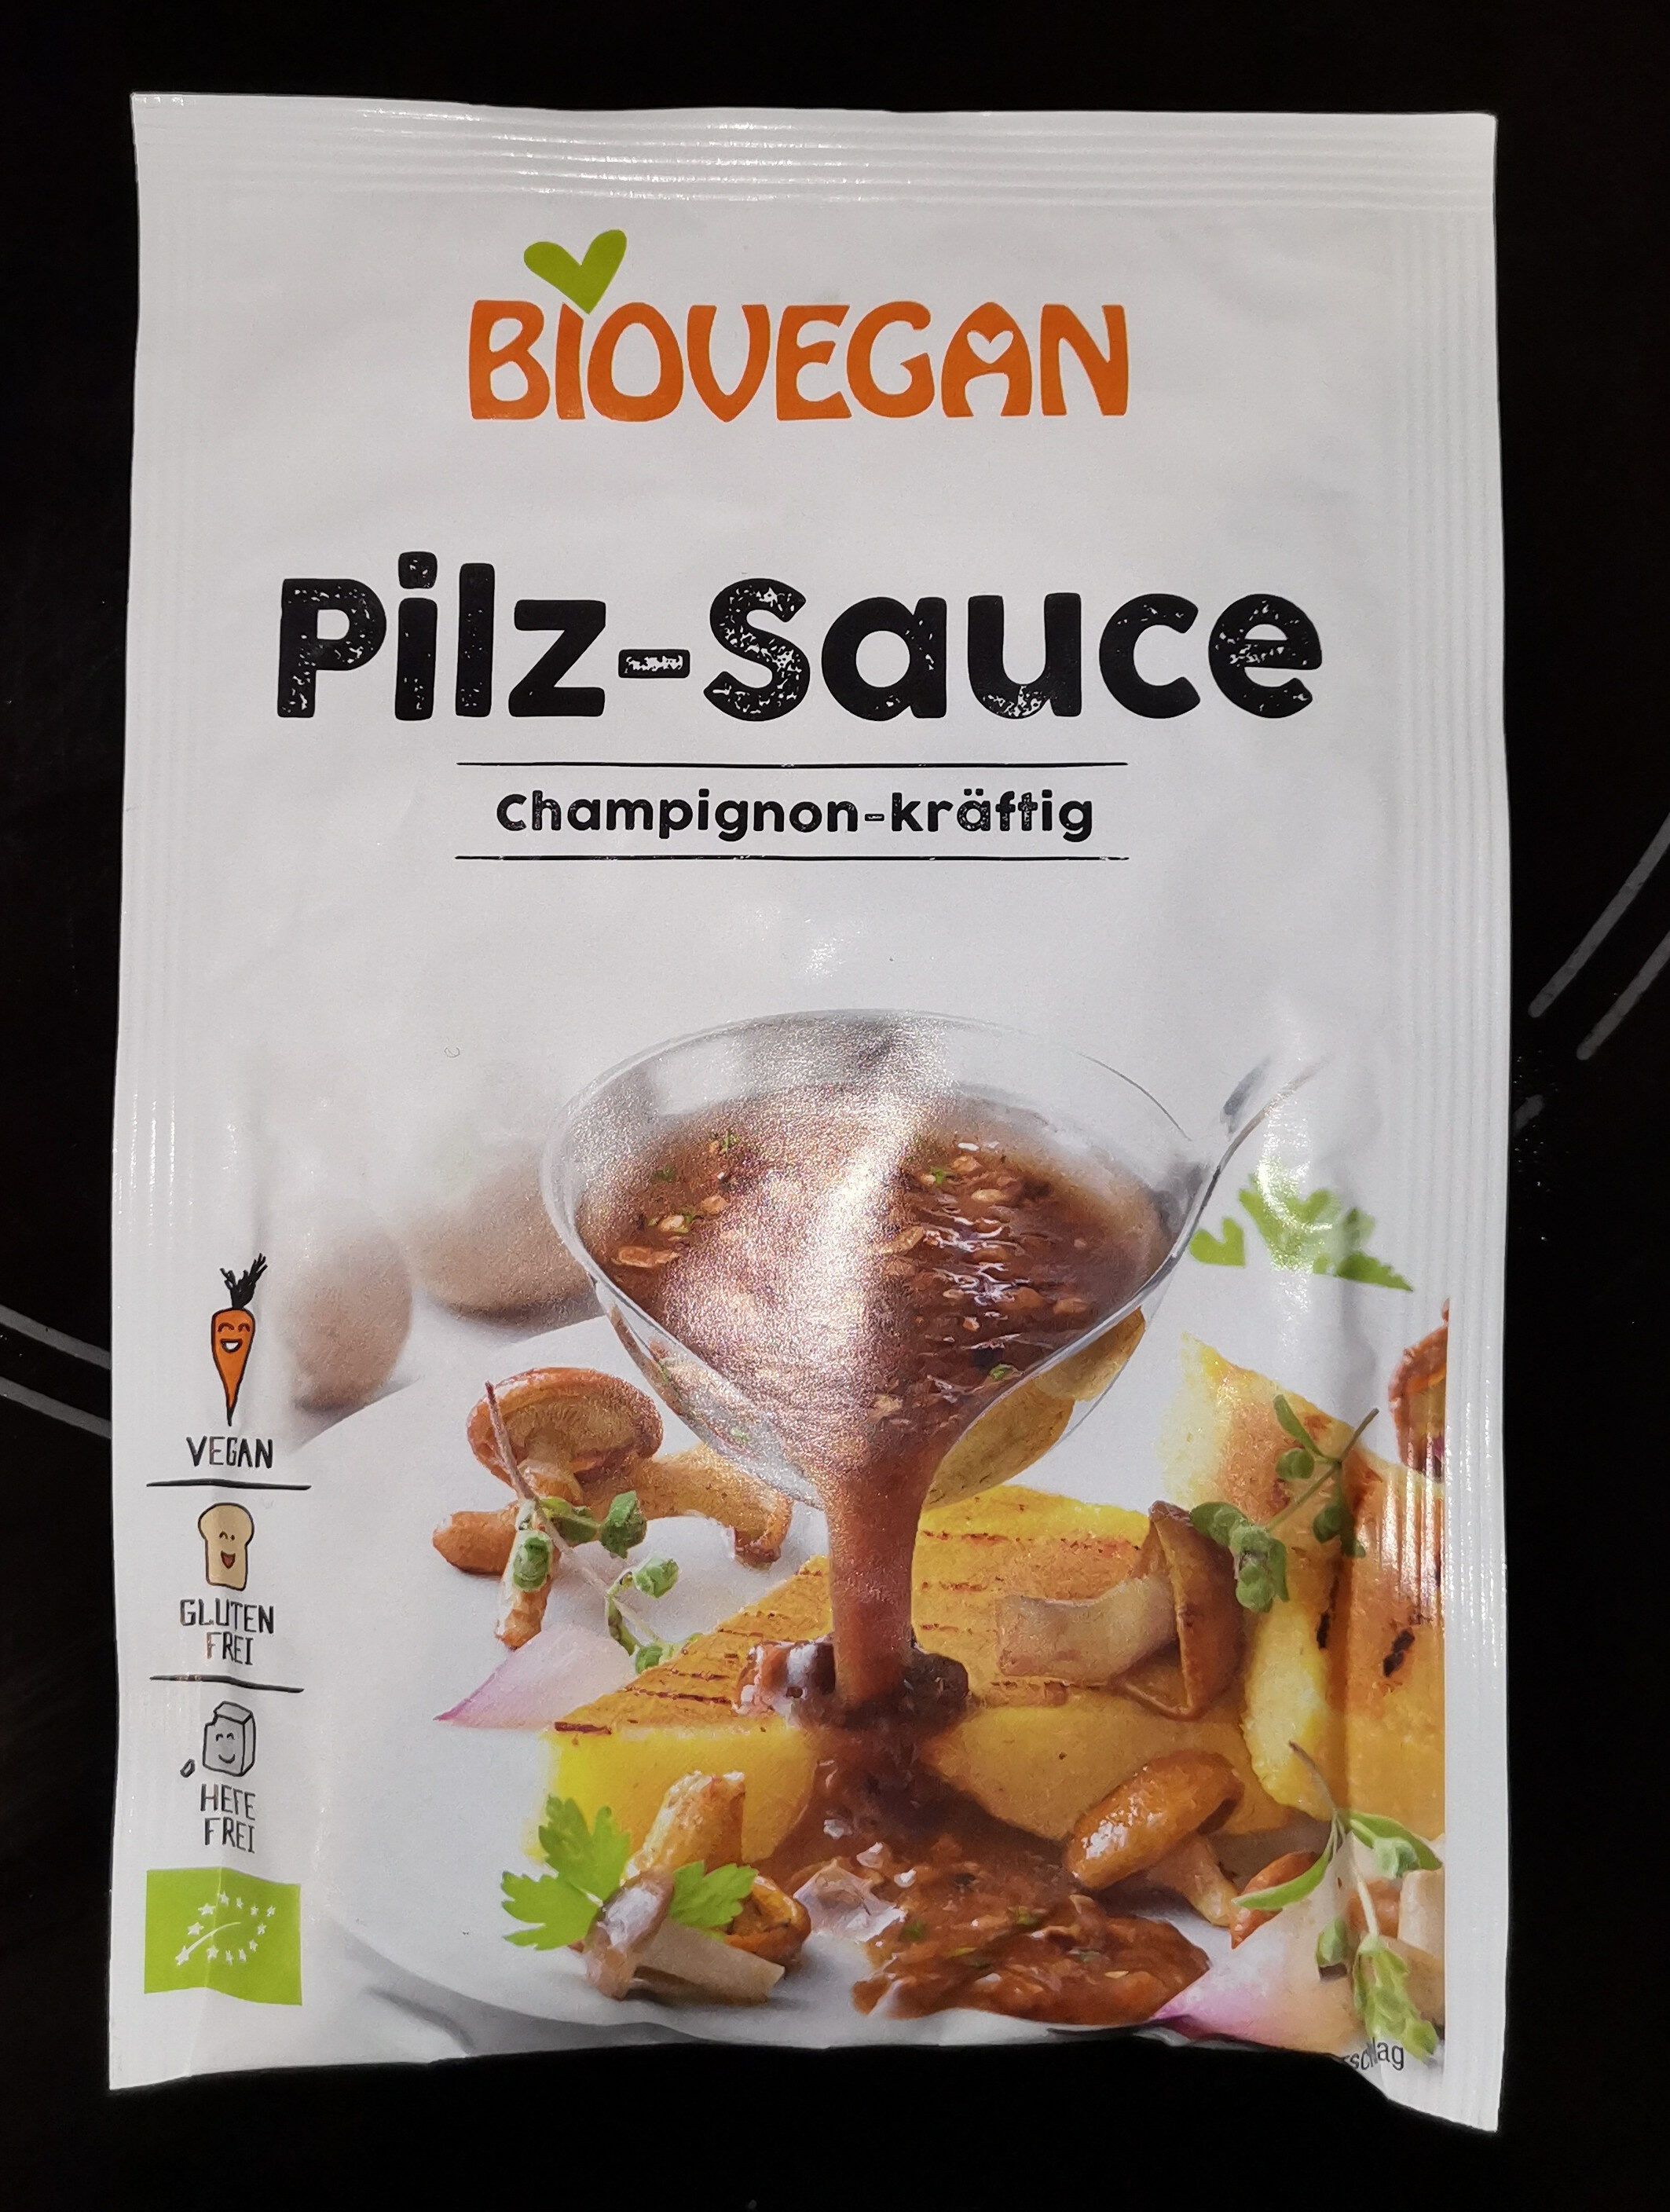 Pilz-sauce champignon-kräftig - Product - de